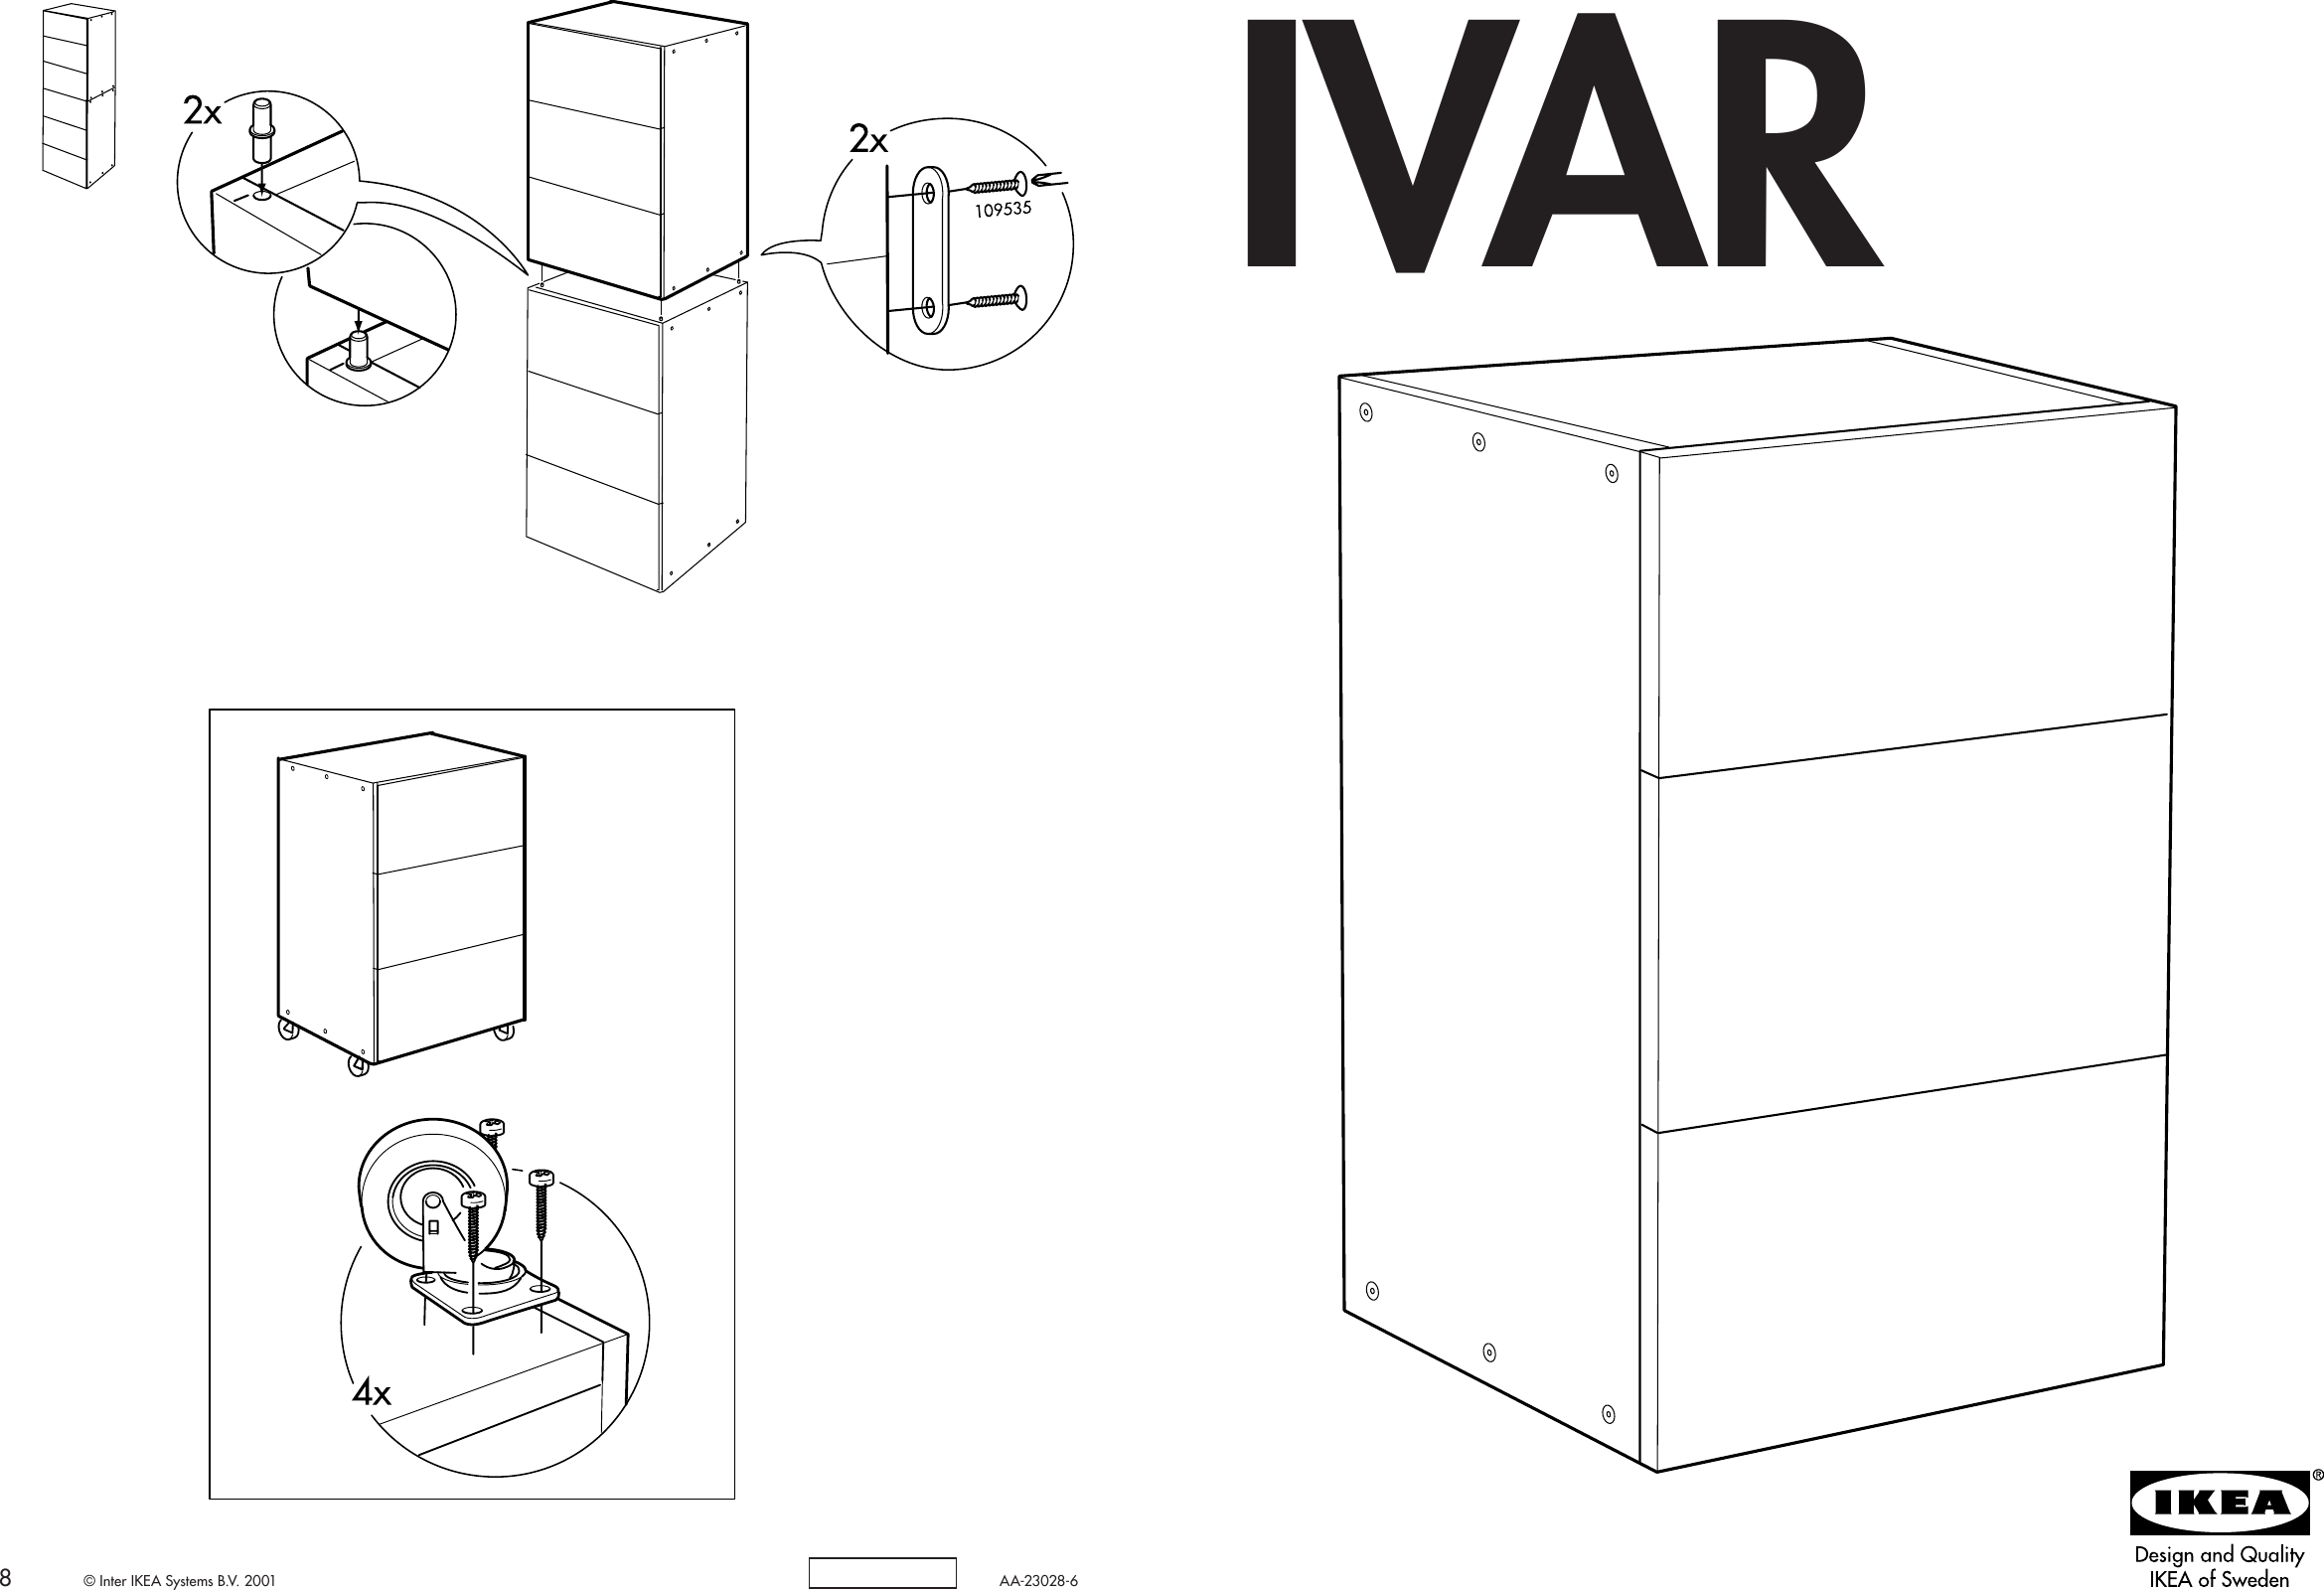 Page 1 of 4 - Ikea Ikea-Ivar-Drawer-Unit-15X22-Assembly-Instruction-2  Ikea-ivar-drawer-unit-15x22-assembly-instruction